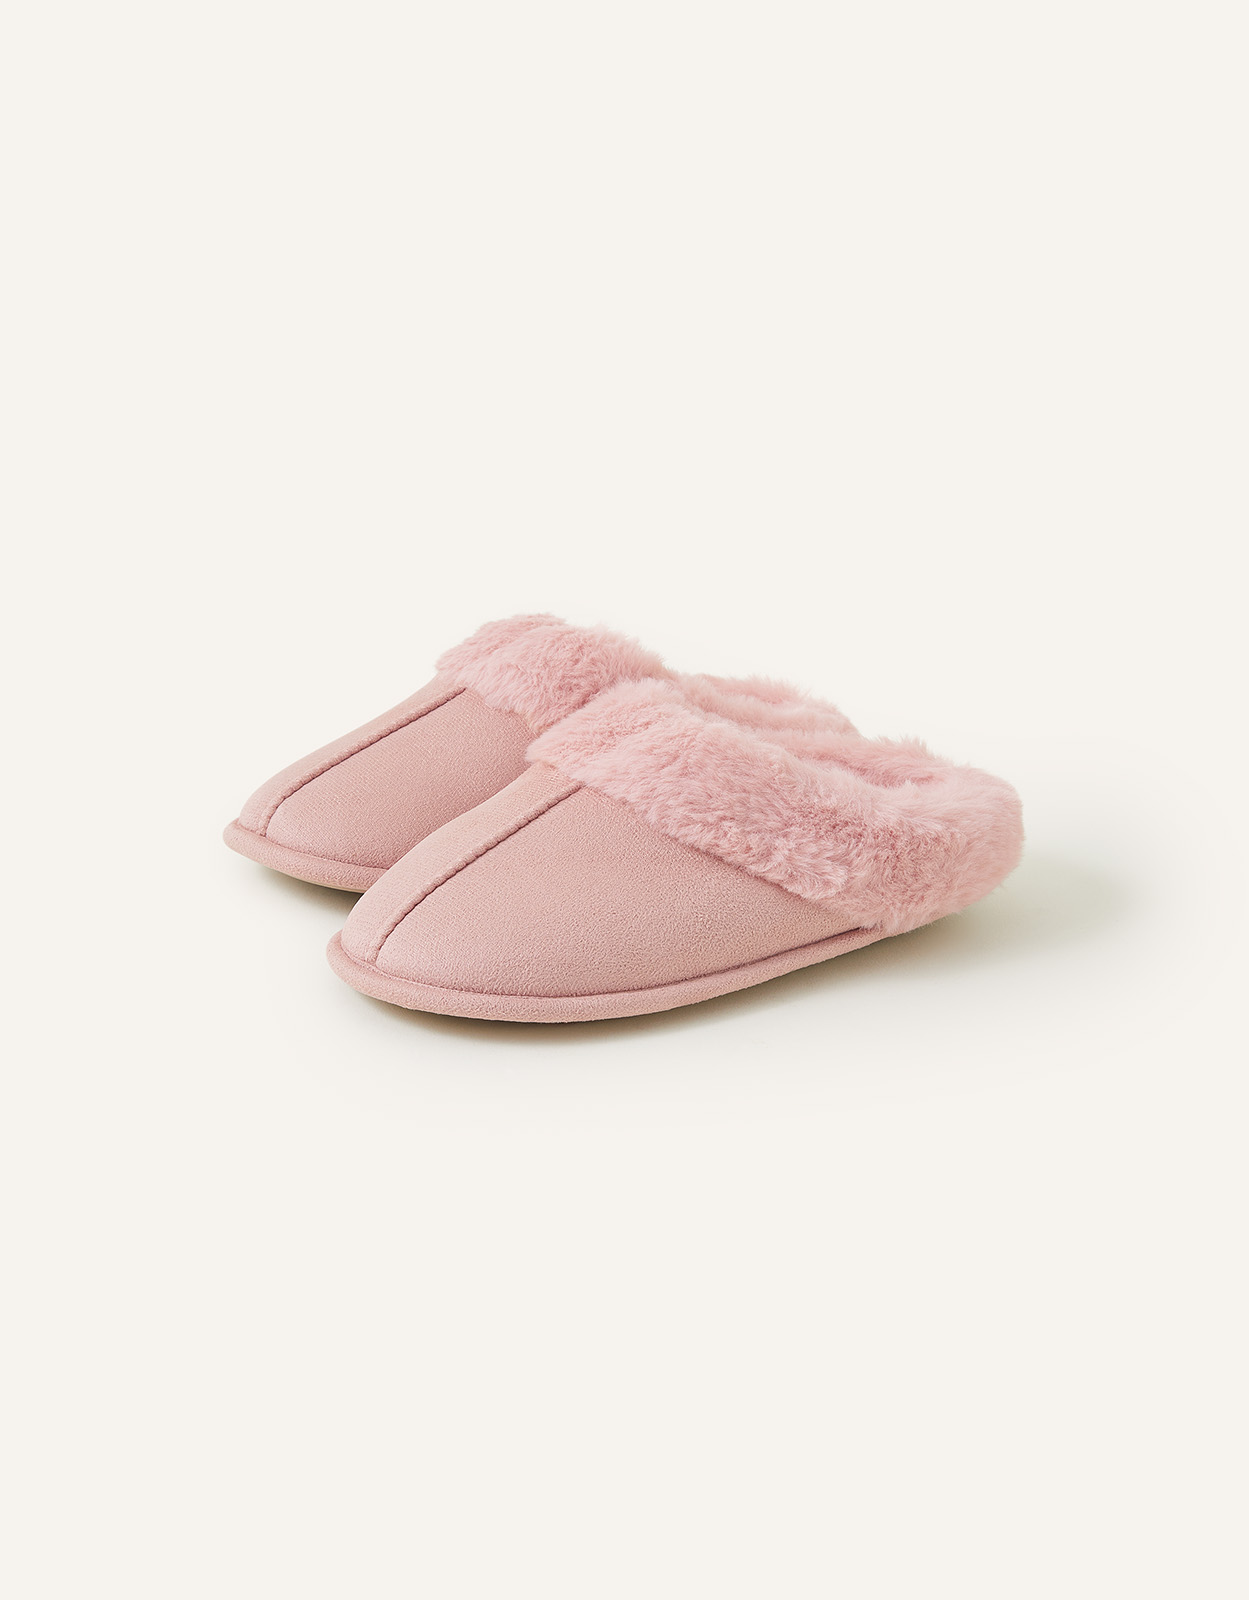 Accessorize Faux Fur Mule Slippers Pink, Size: XL